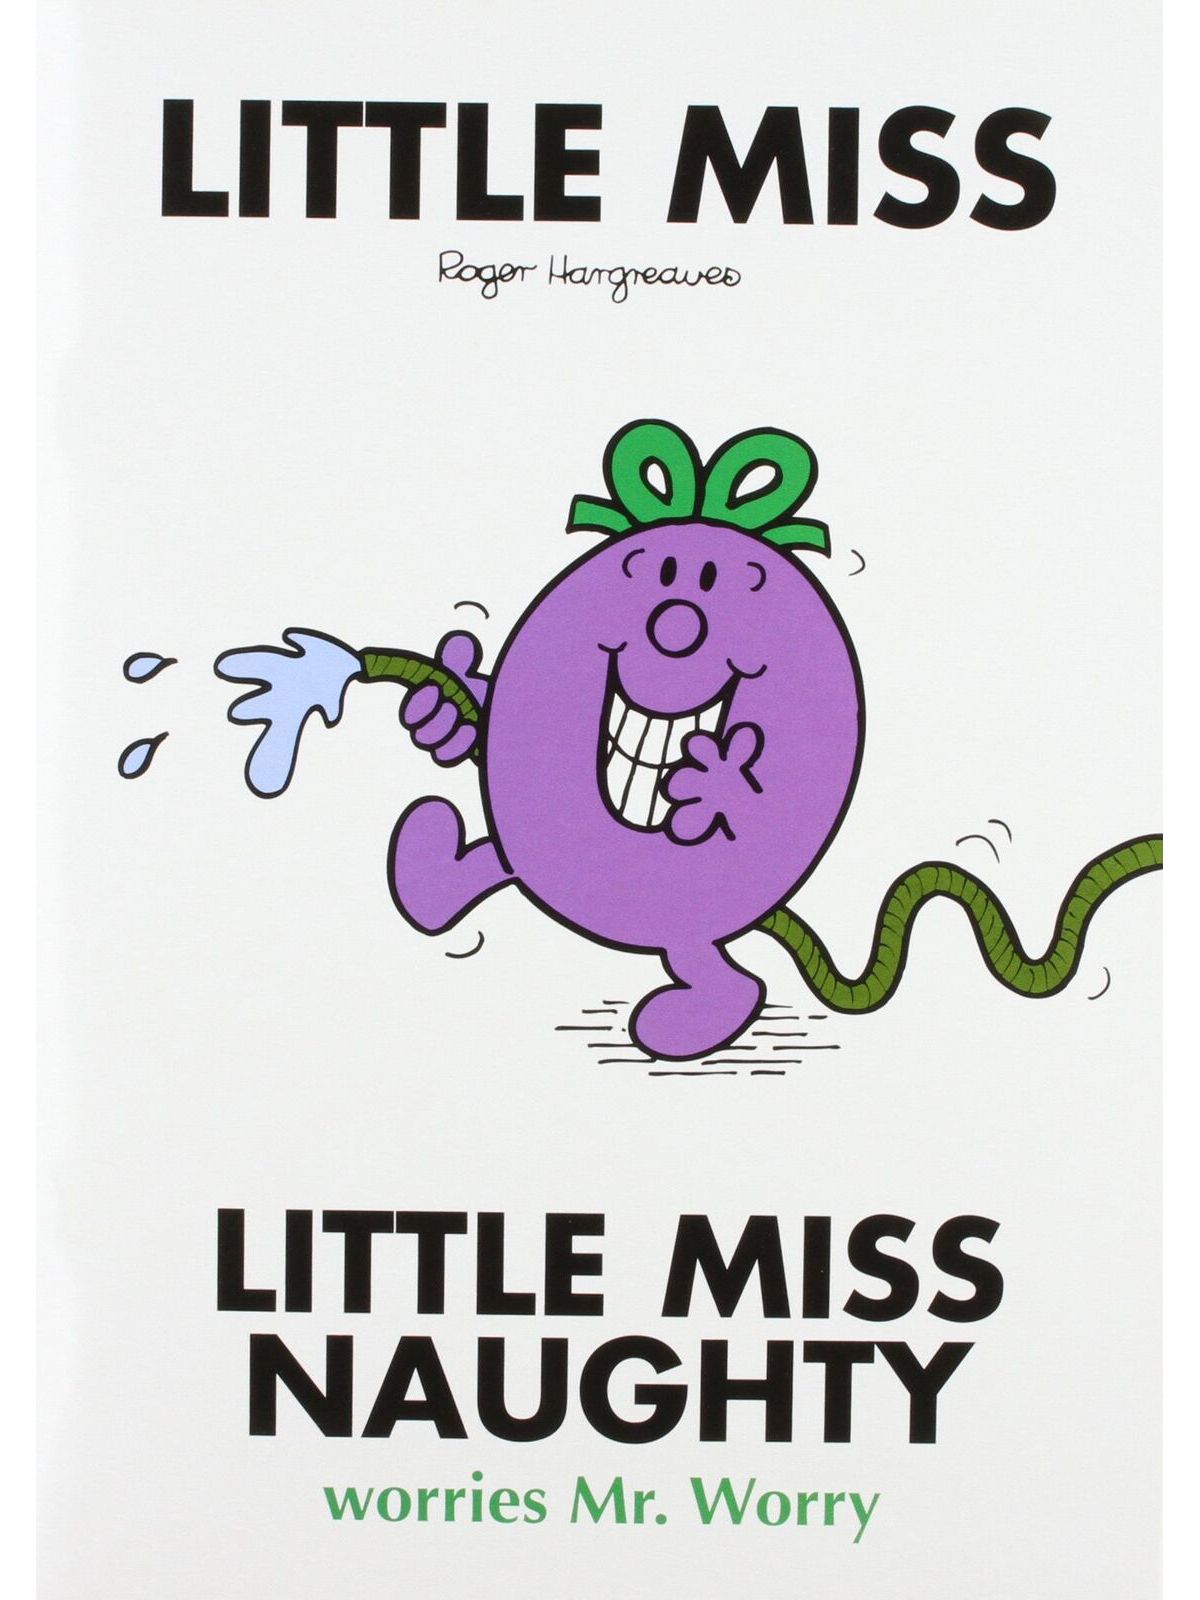 MR MEN LITTLE MISS: LITTLE MISS NAUGHTY WORRIES MR WORRY  Купить Книгу на Английском